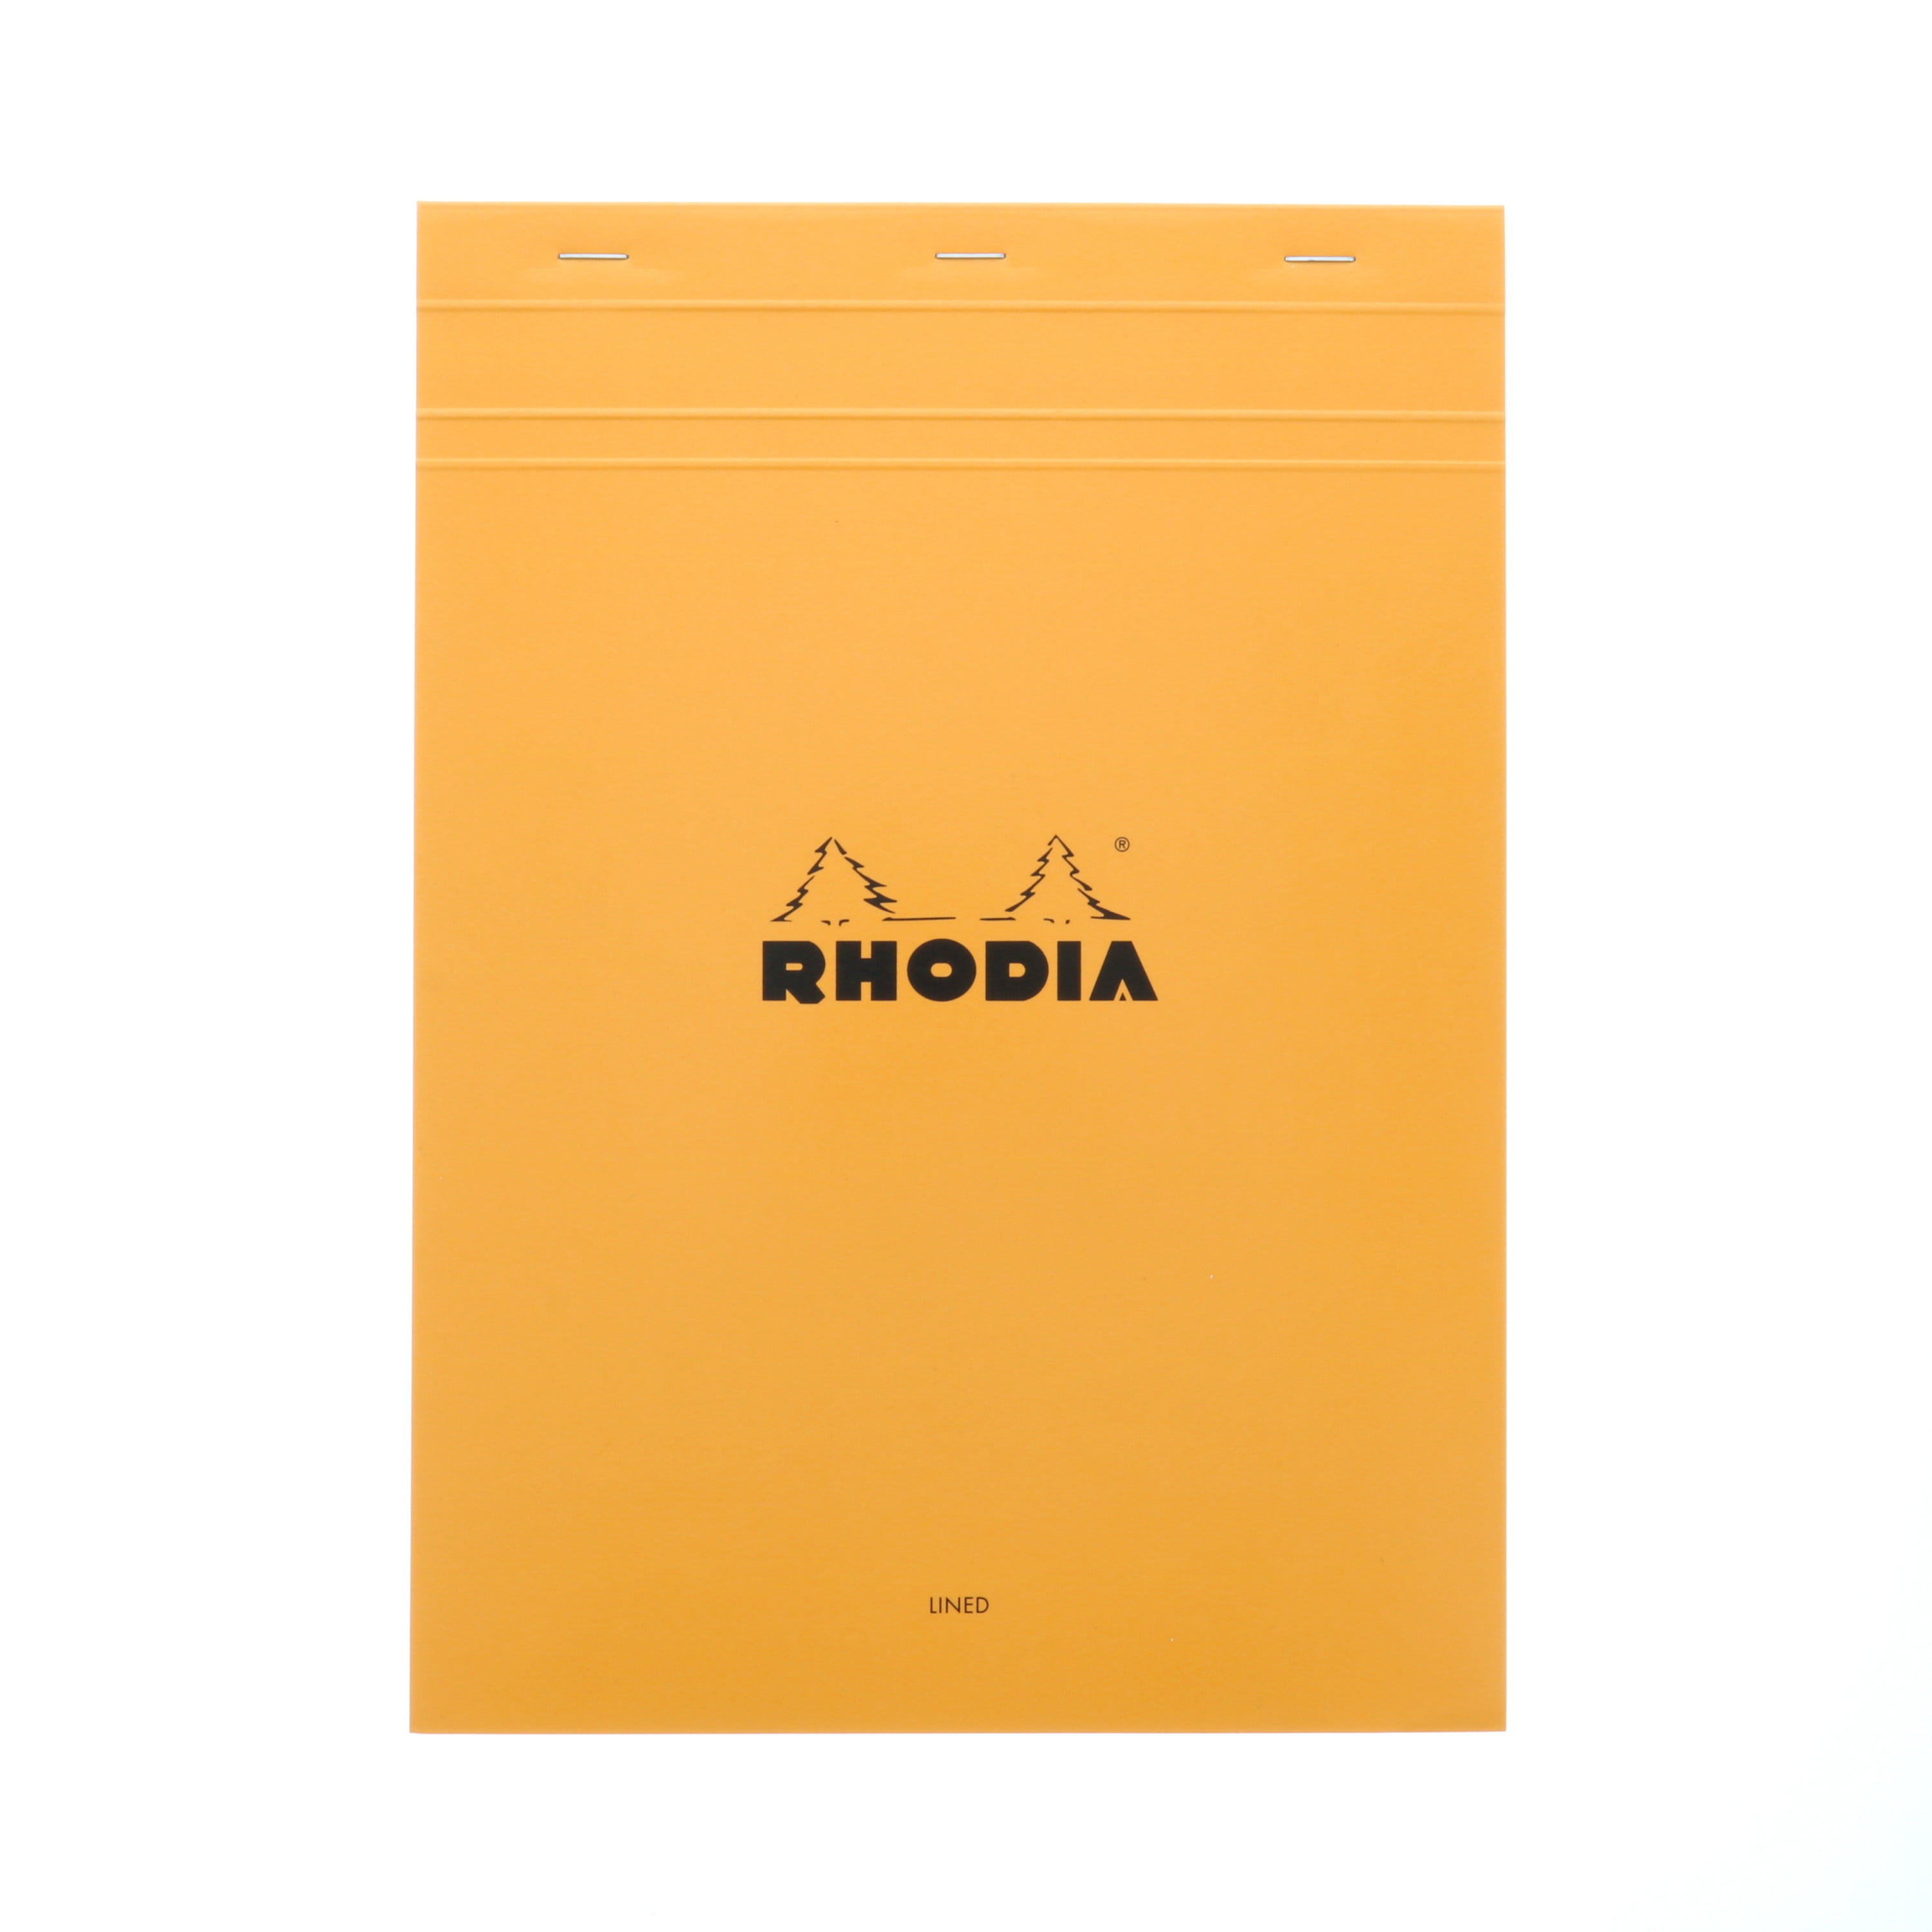 Rhodia Pad 8 25 X 11 75 Ruled Orange